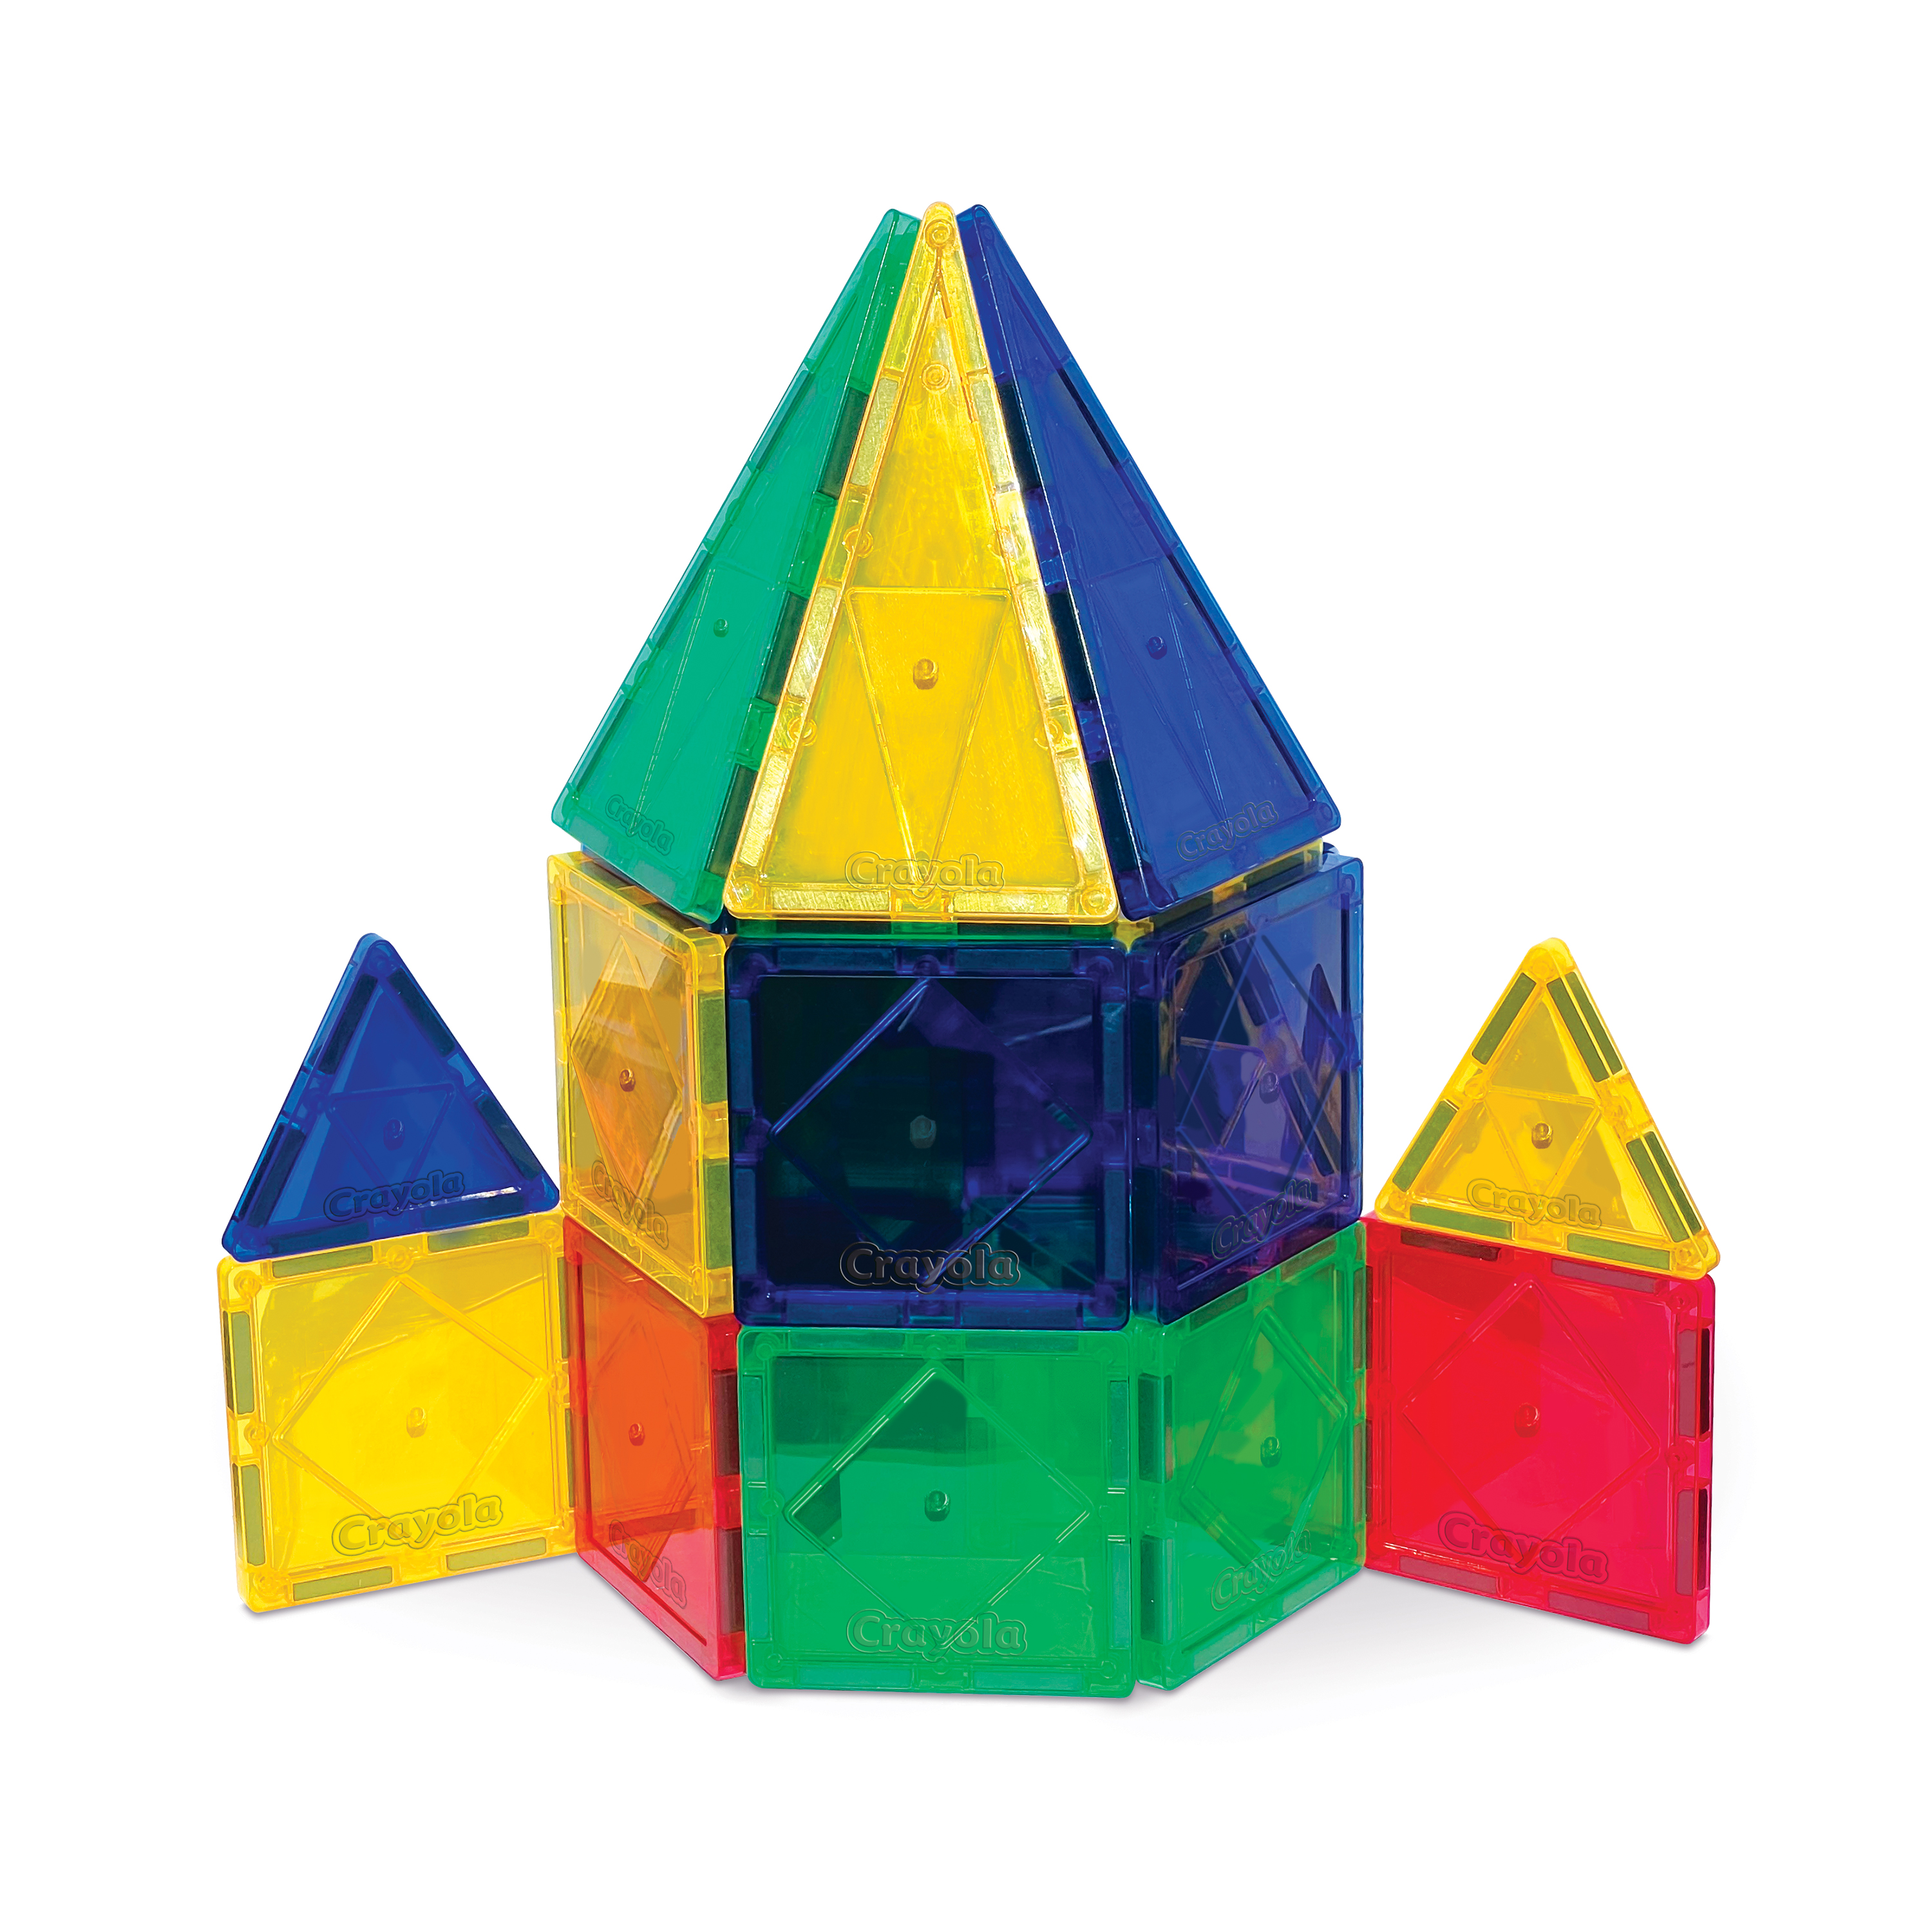 Crayola Pastel Magnetic Tiles 14 Piece Expansion Pack - CreateOn Magnetic  Building Tiles STEM Toys